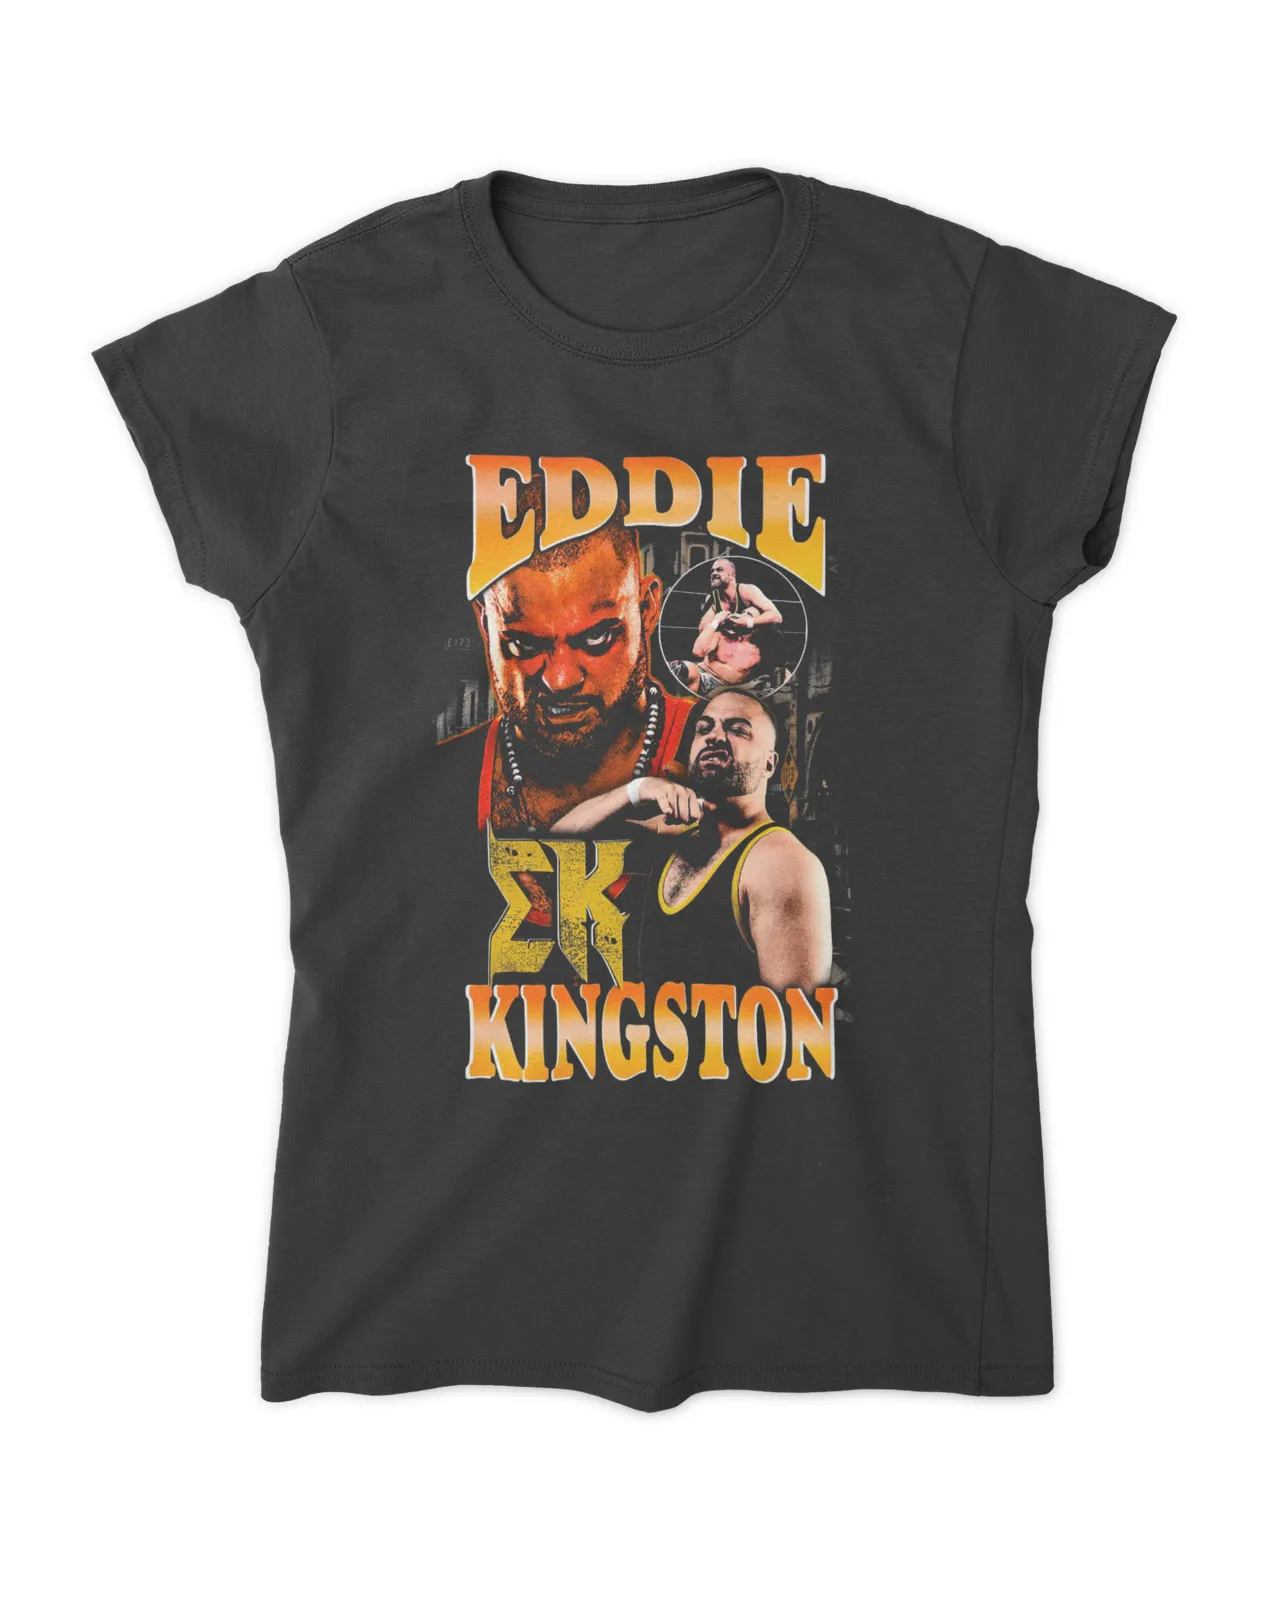 Eddie Kingston Shirt